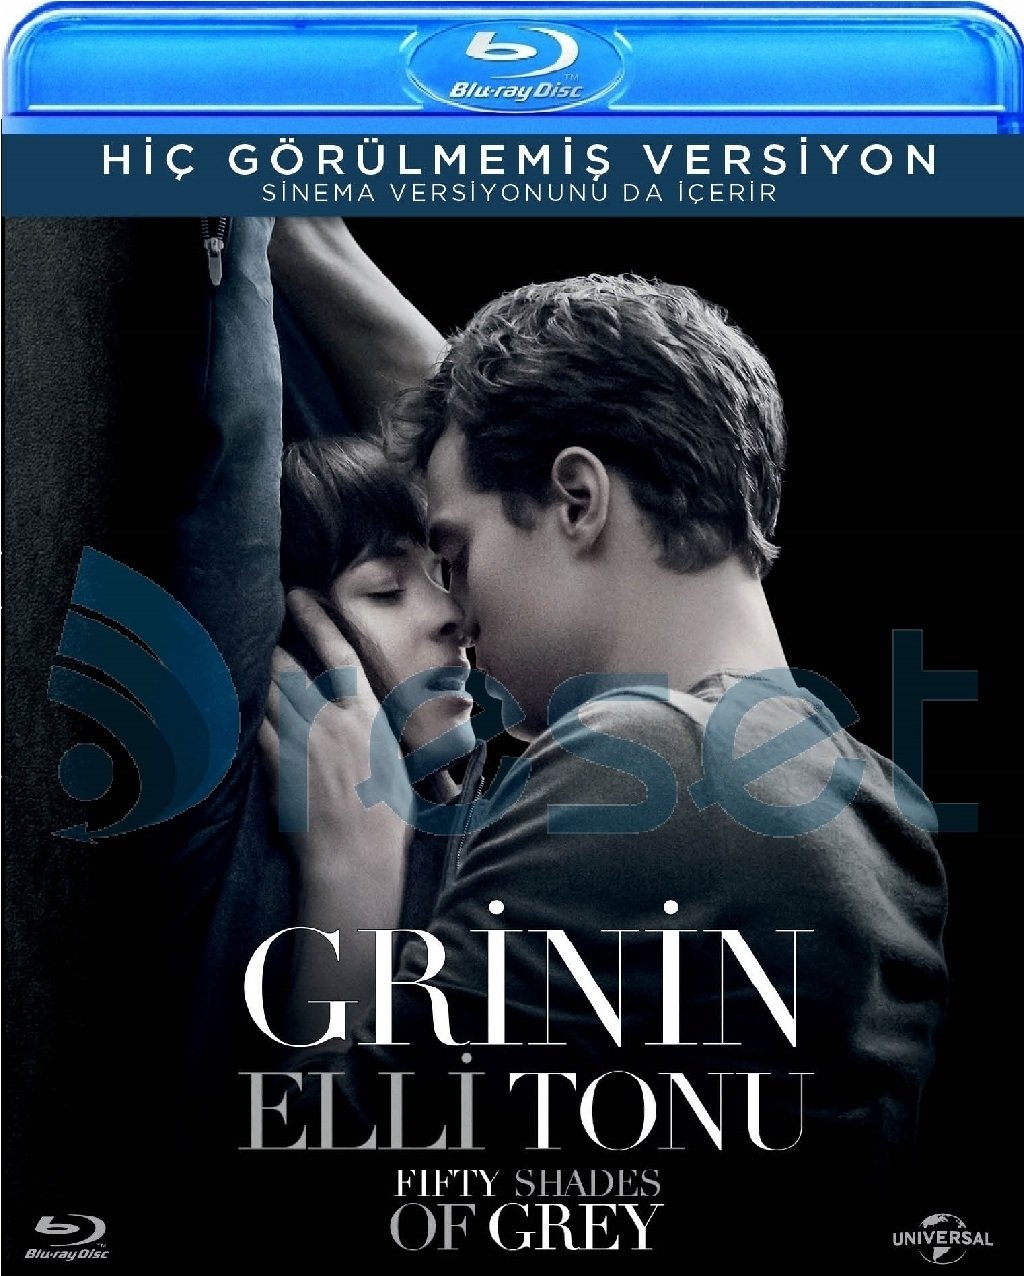 Fifthy Shades of Grey - Grinin Elli Tonu Blu-Ray